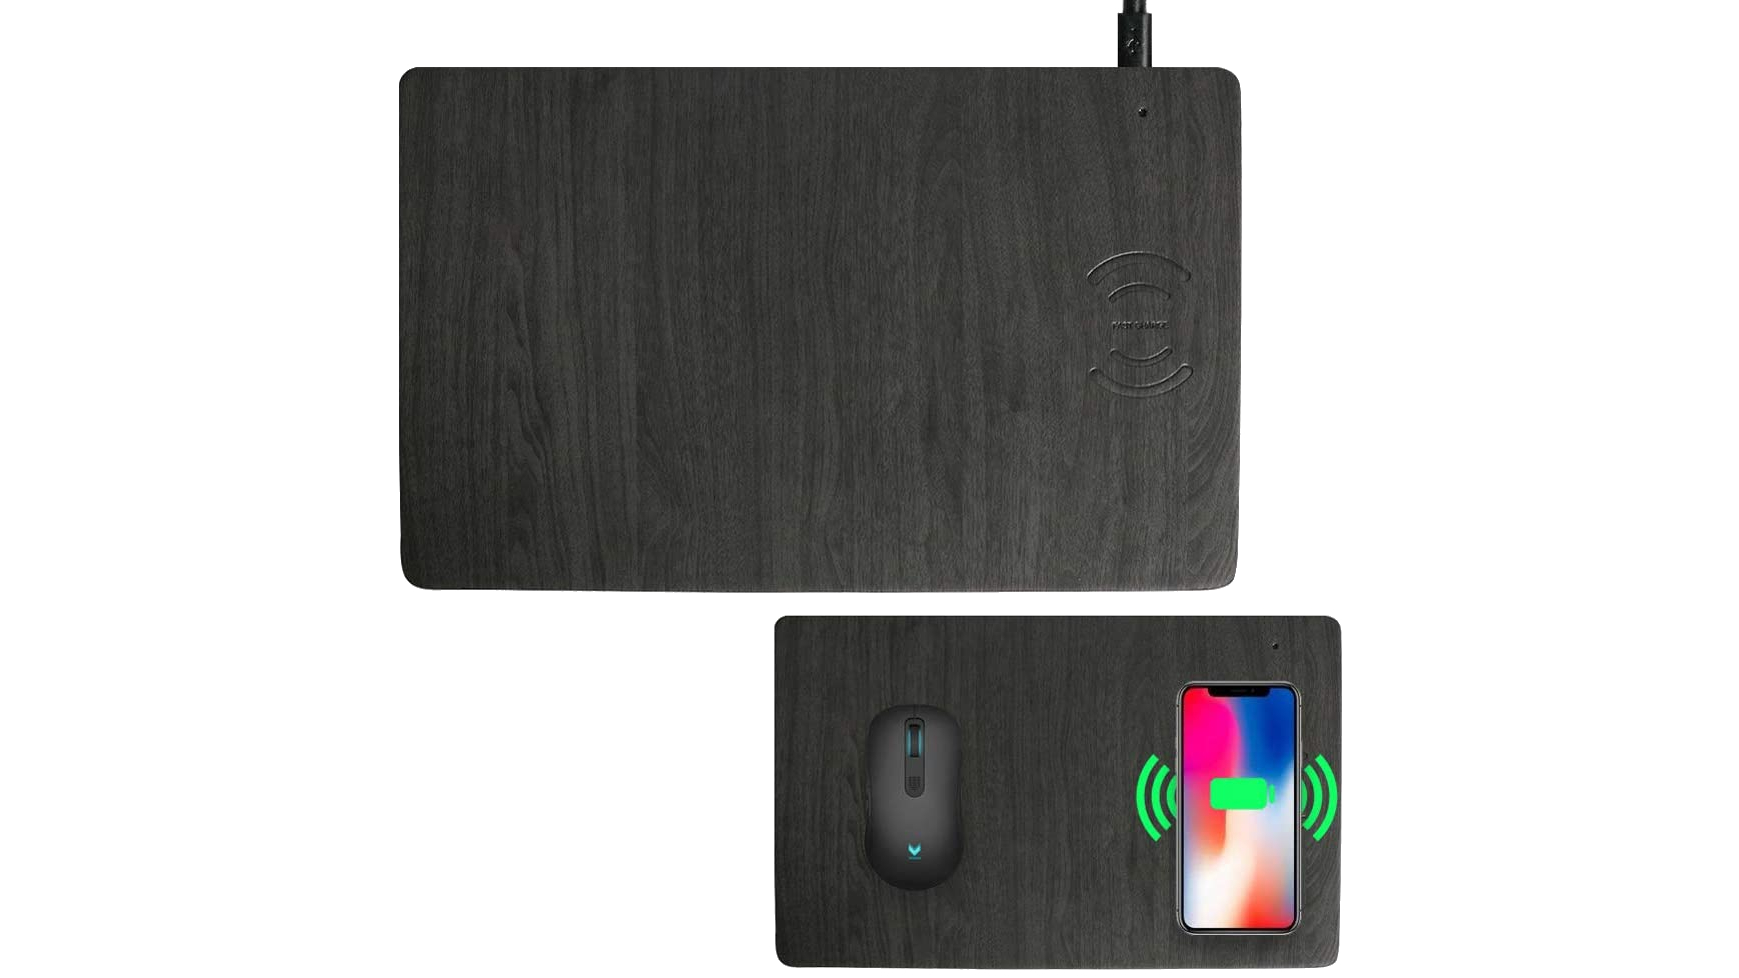 JCREN wireless charging mouse pad